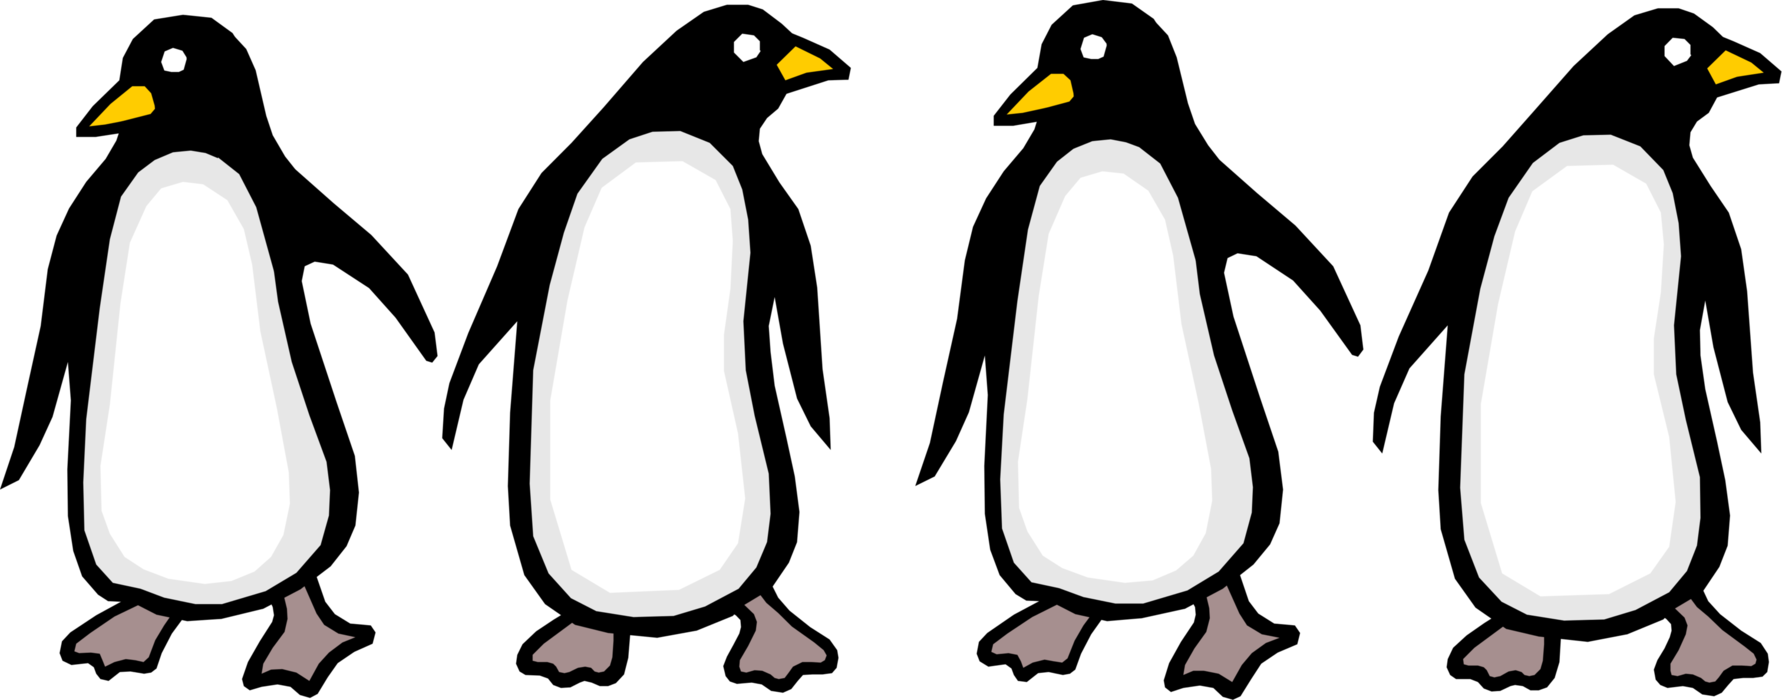 Vector Illustration of Southern Hemisphere Antarctic Polar Region Penguin Flightless Aquatic Birds Stand in Row